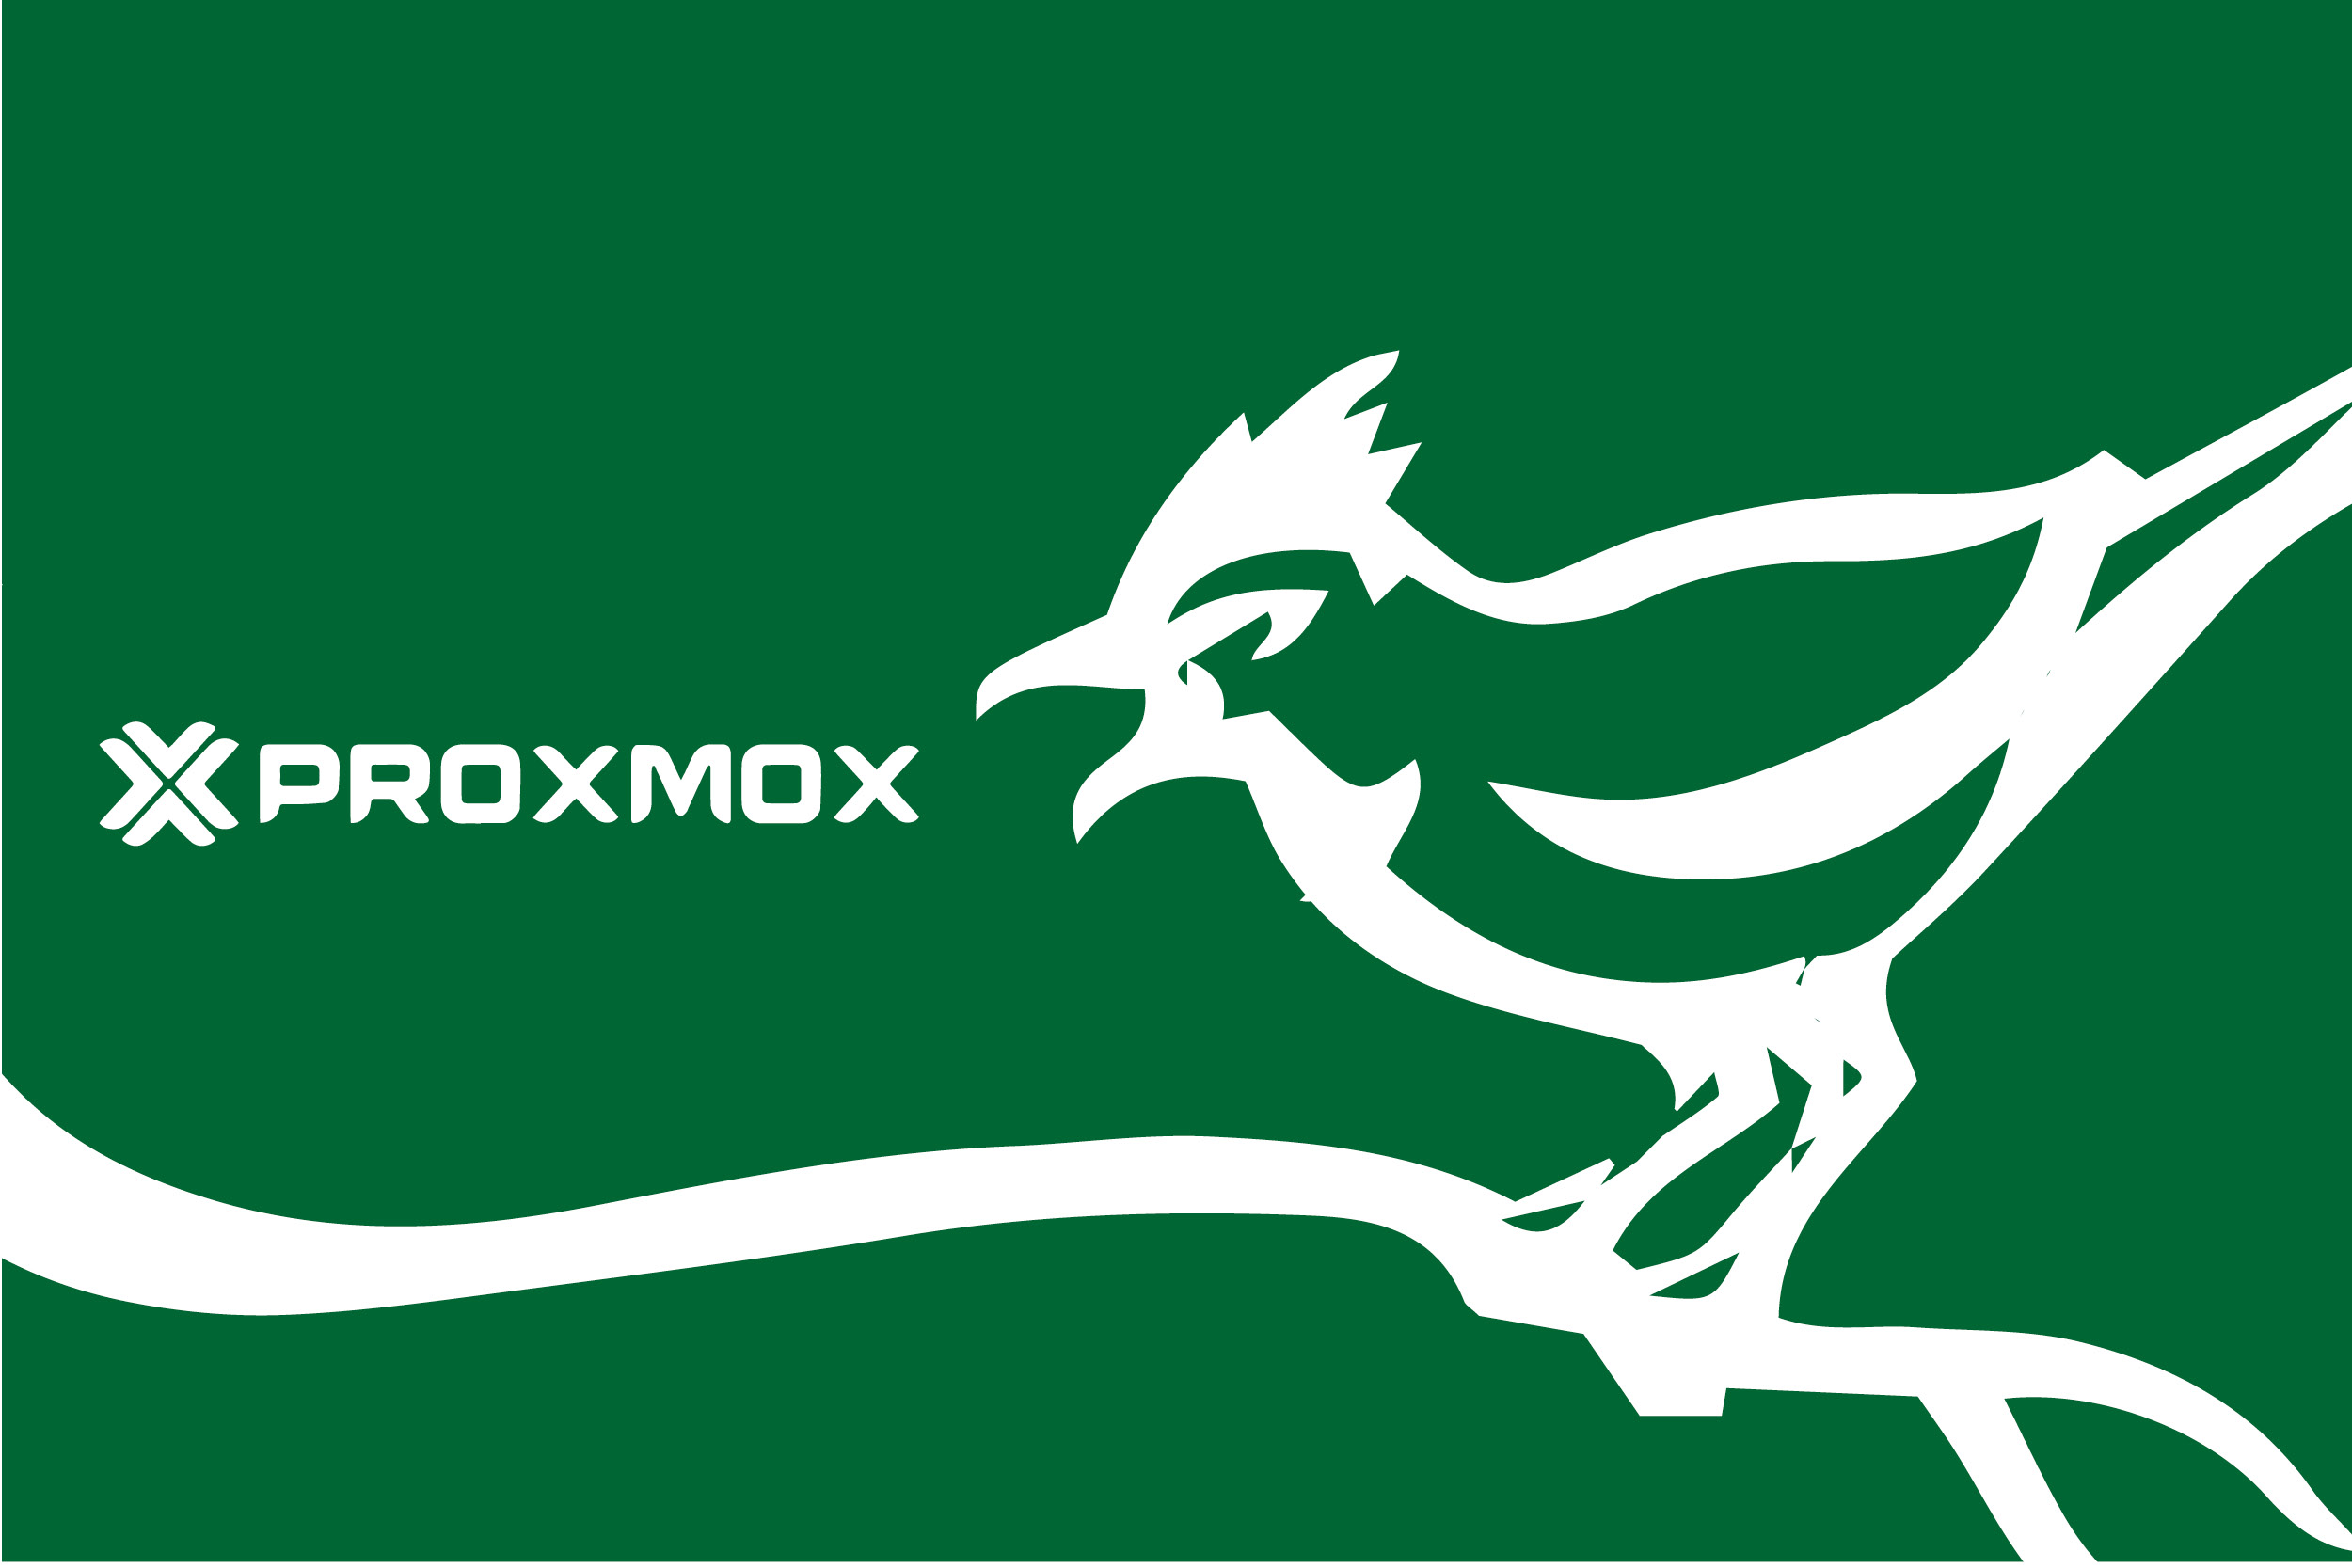 PROXMOX logo